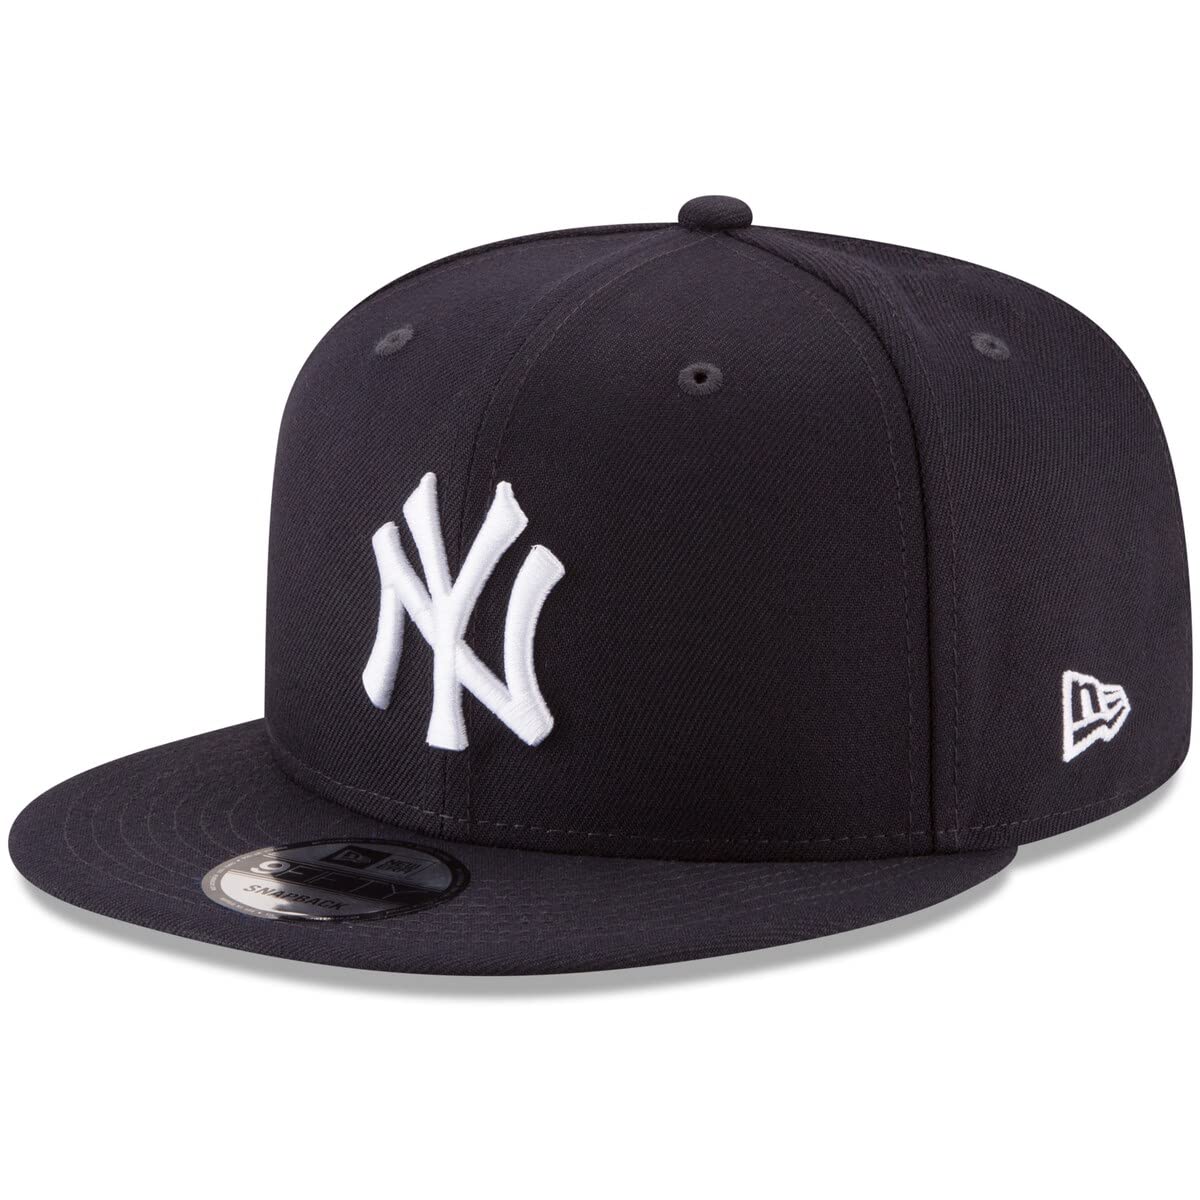 MLB Pro Standard Pro League Wool Snapback Hat  White